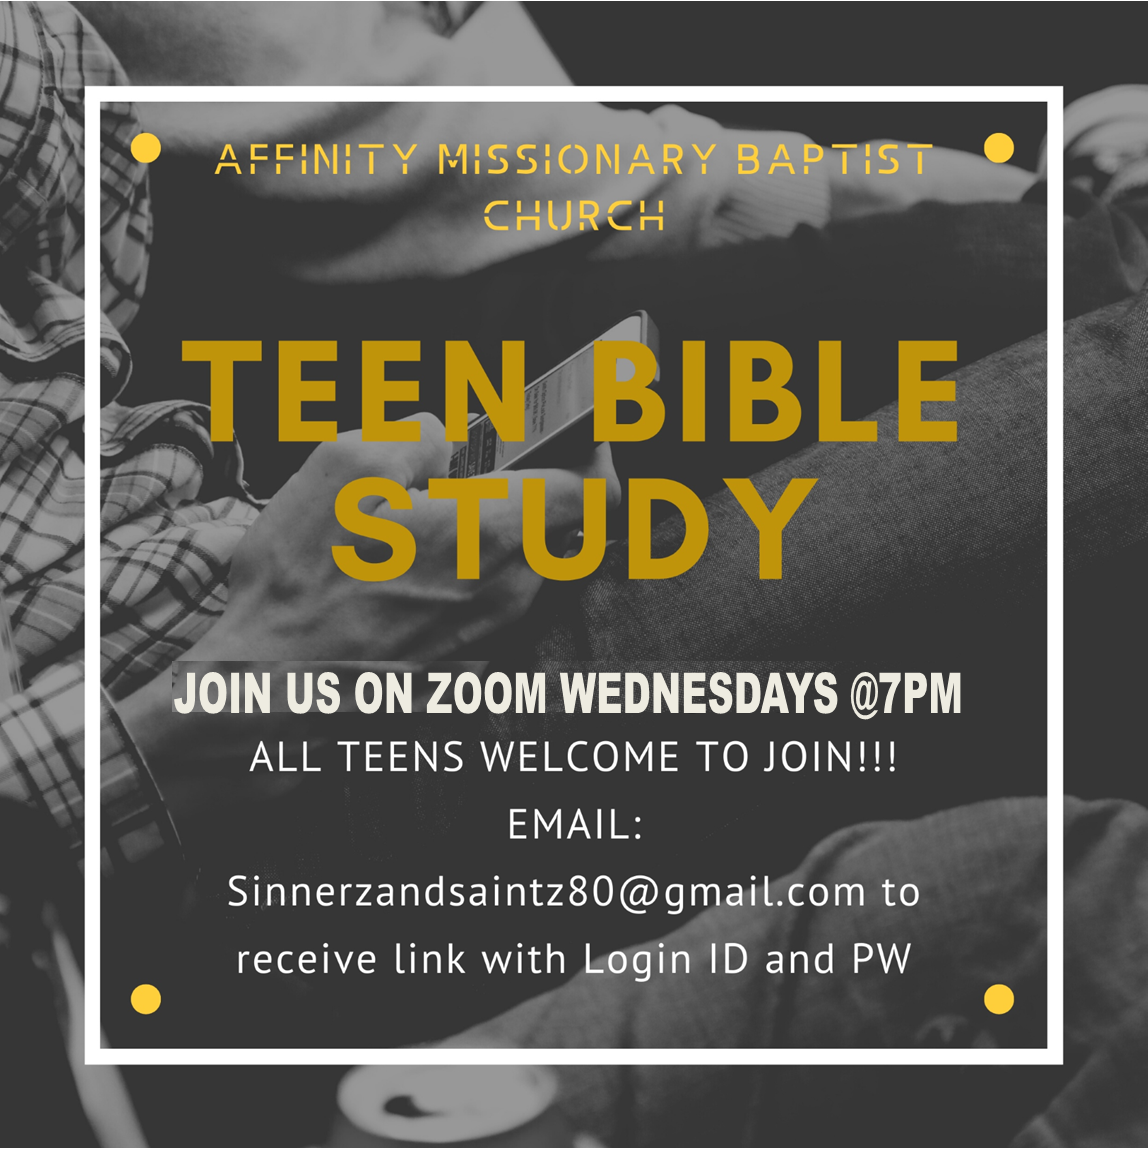 Teen Bible Study via ZOOM